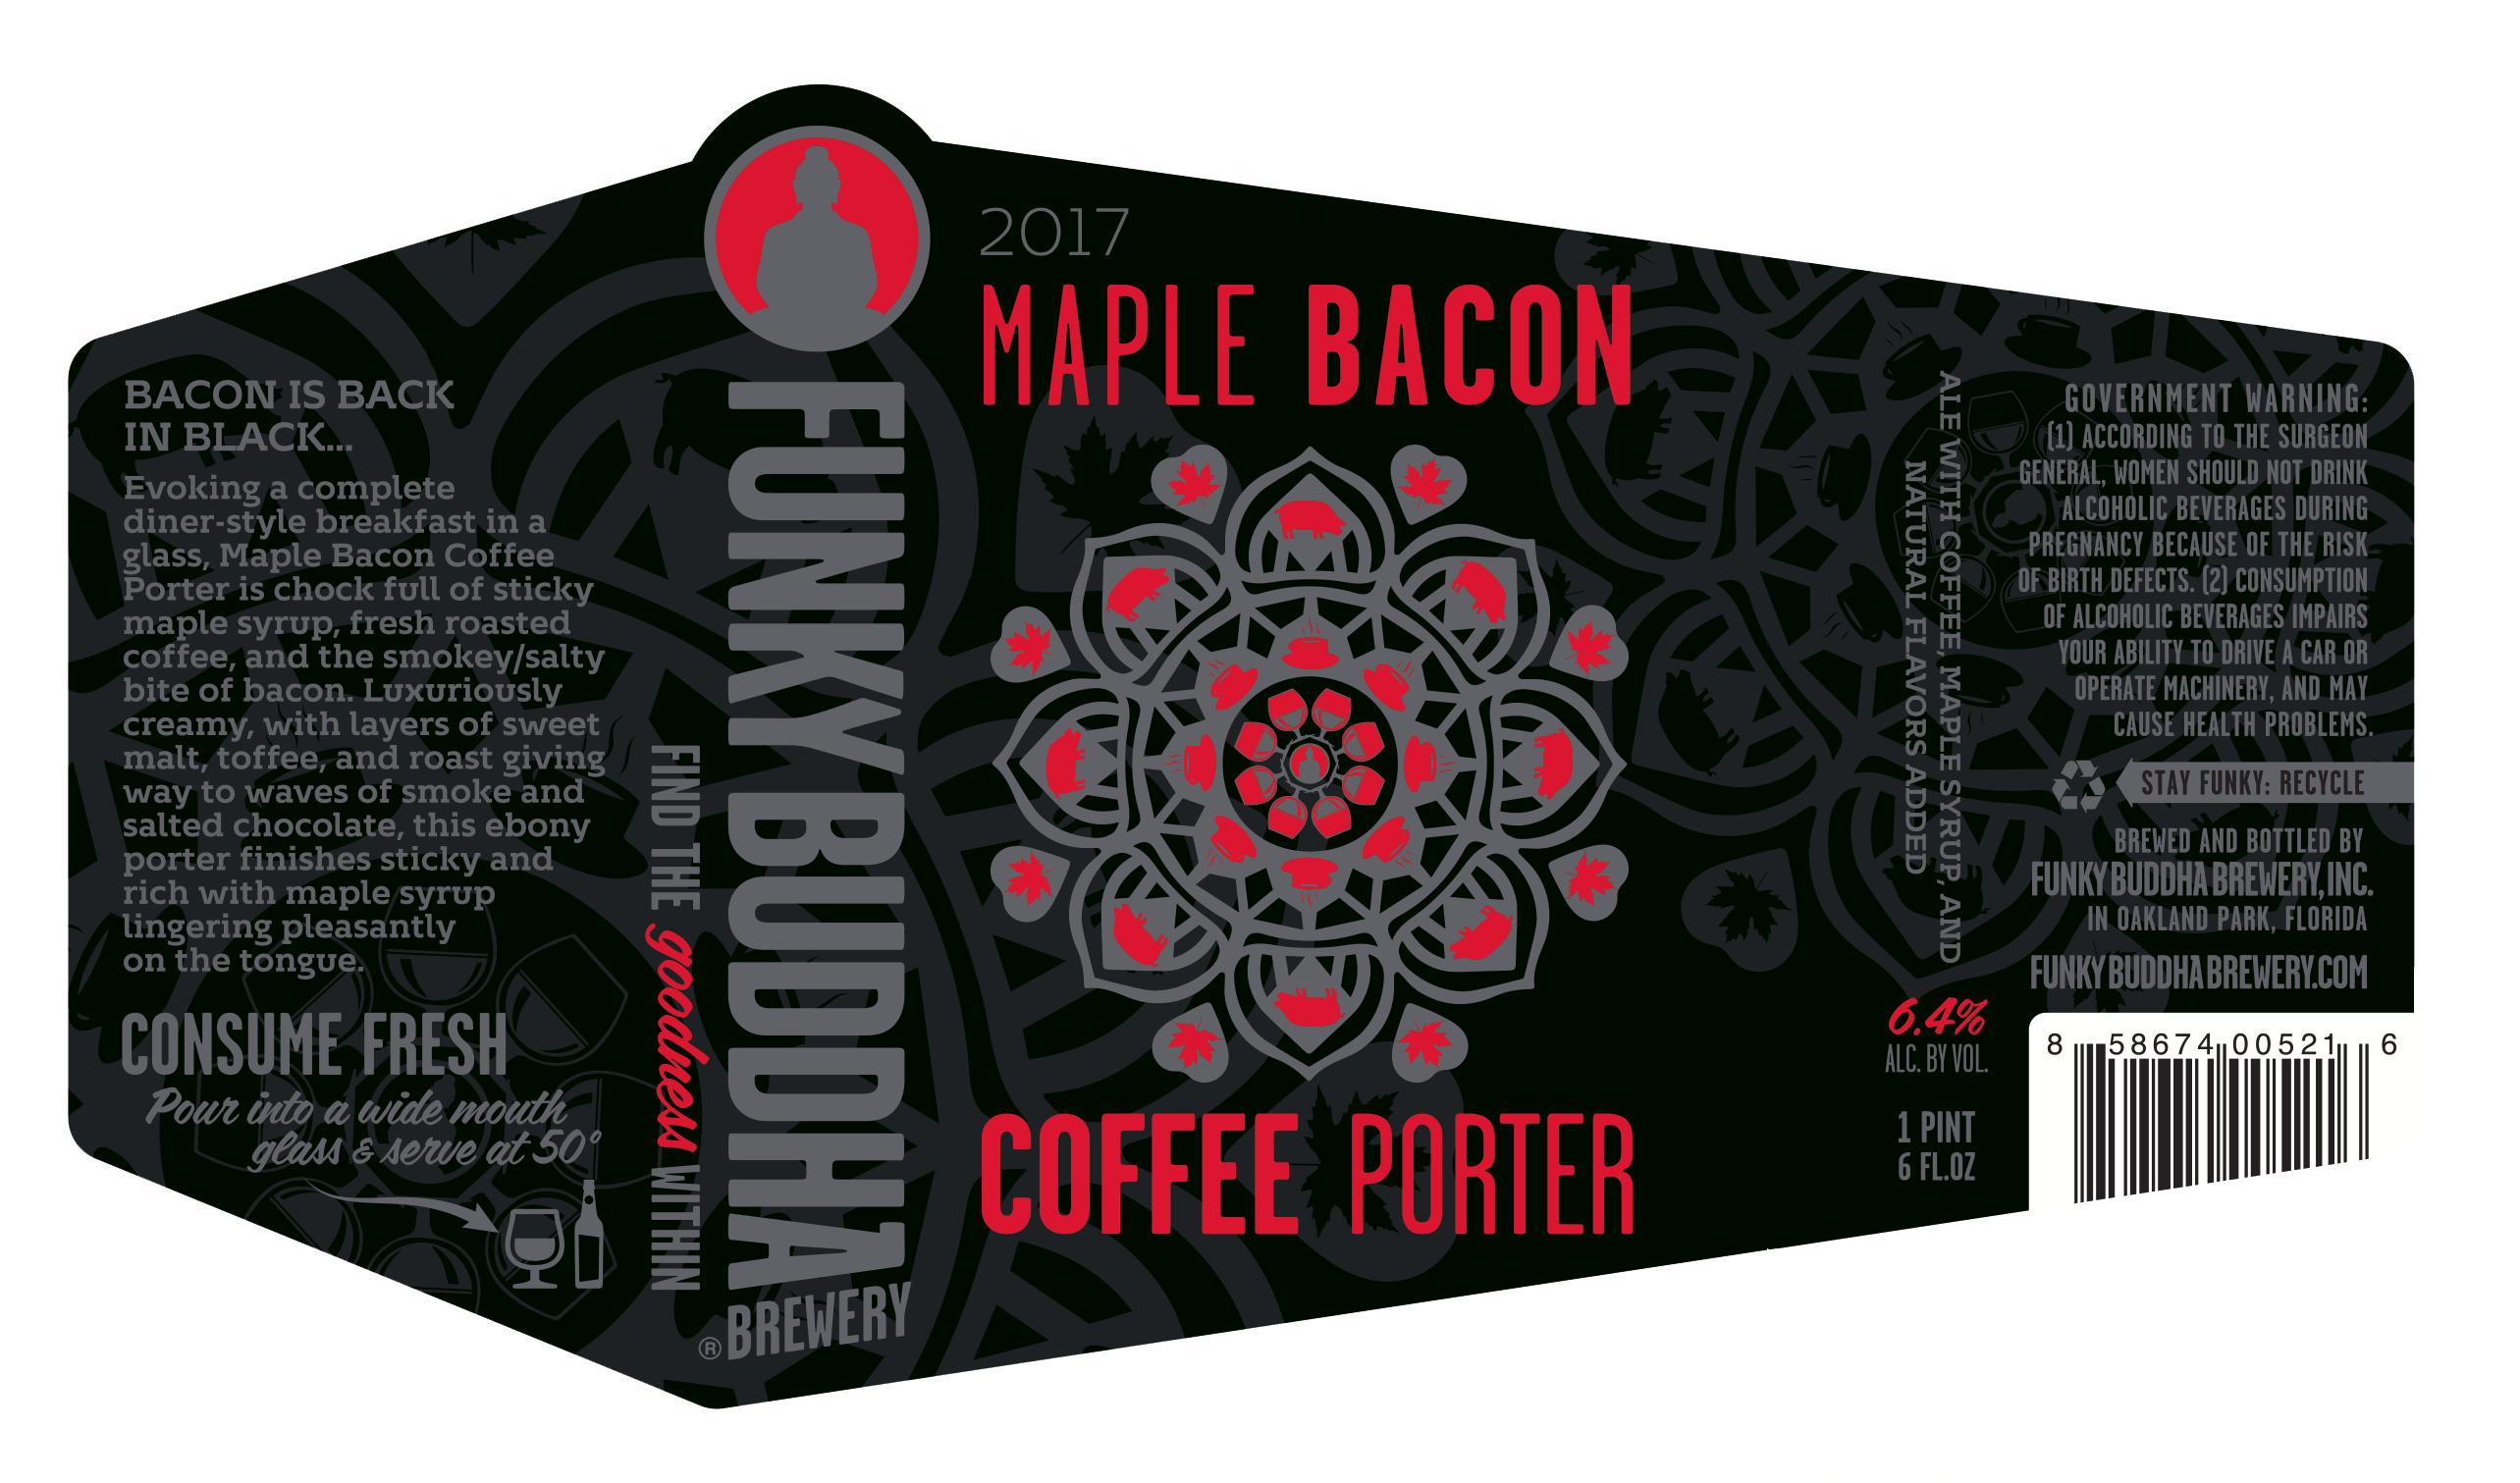 Funky Buddha Brewery Maple Bacon Coffee Porter